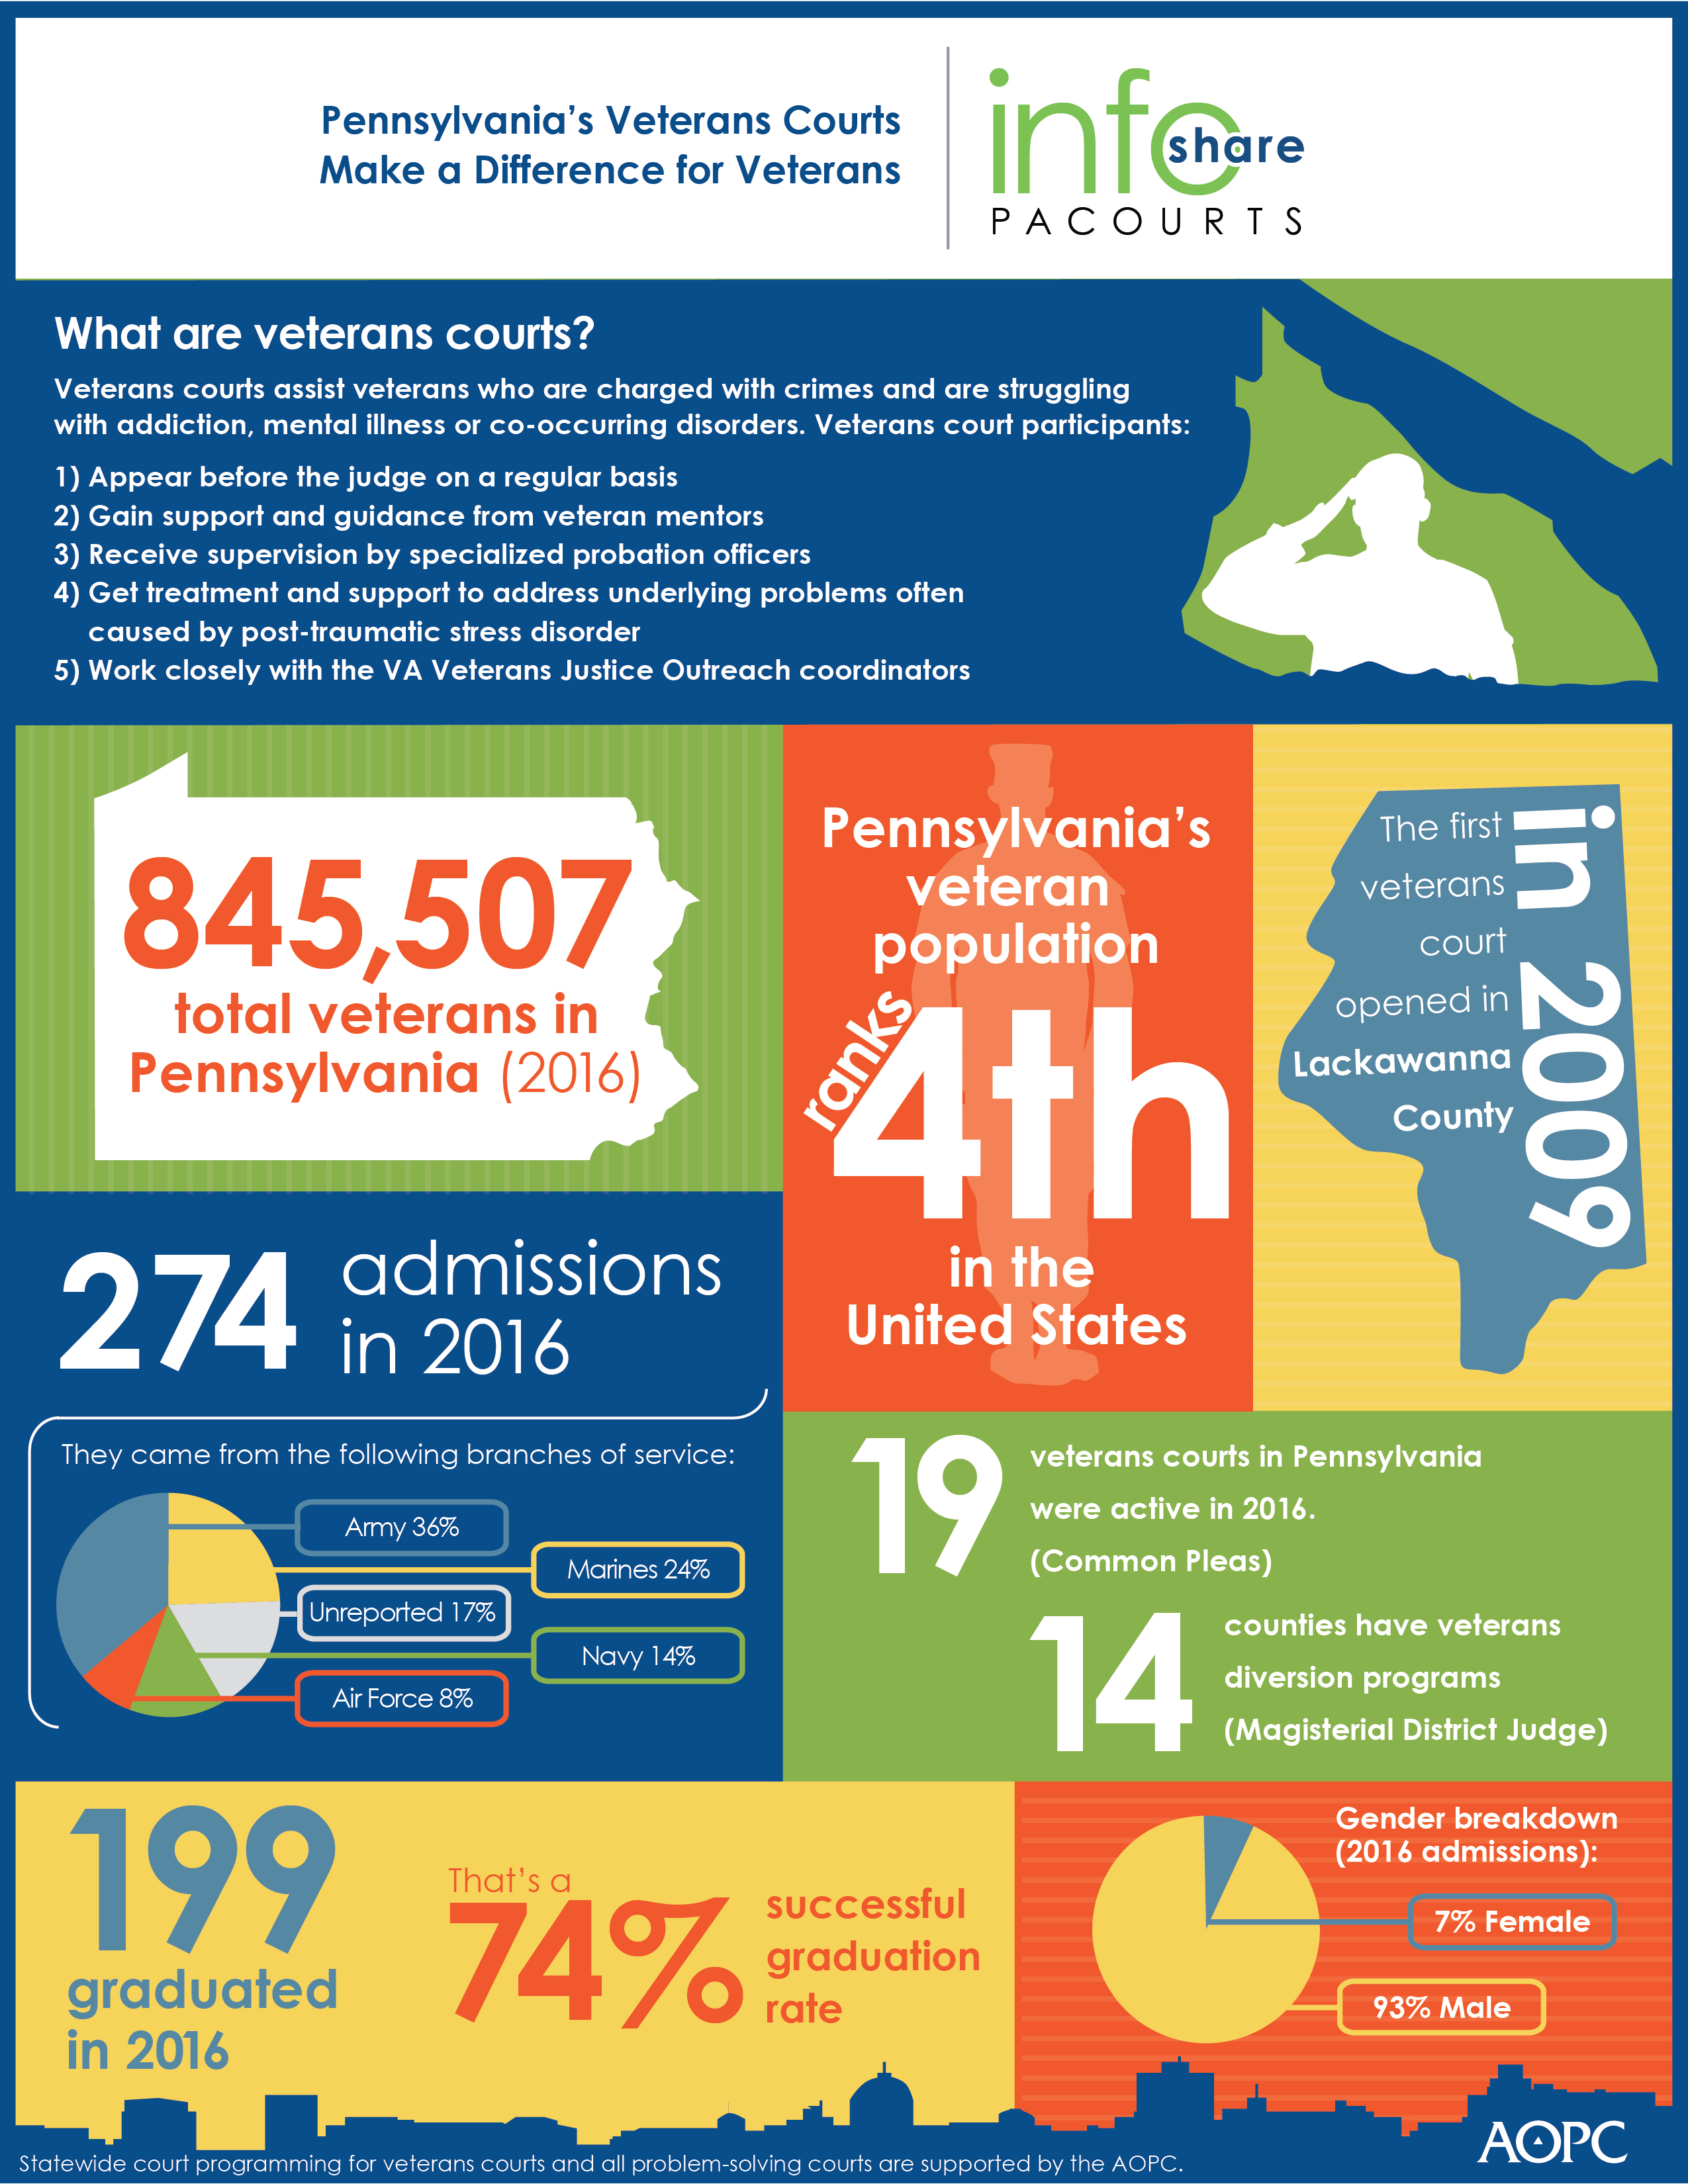 Pennsylvanias Veterans Courts Make a Difference for Veterans - 006406.jpg